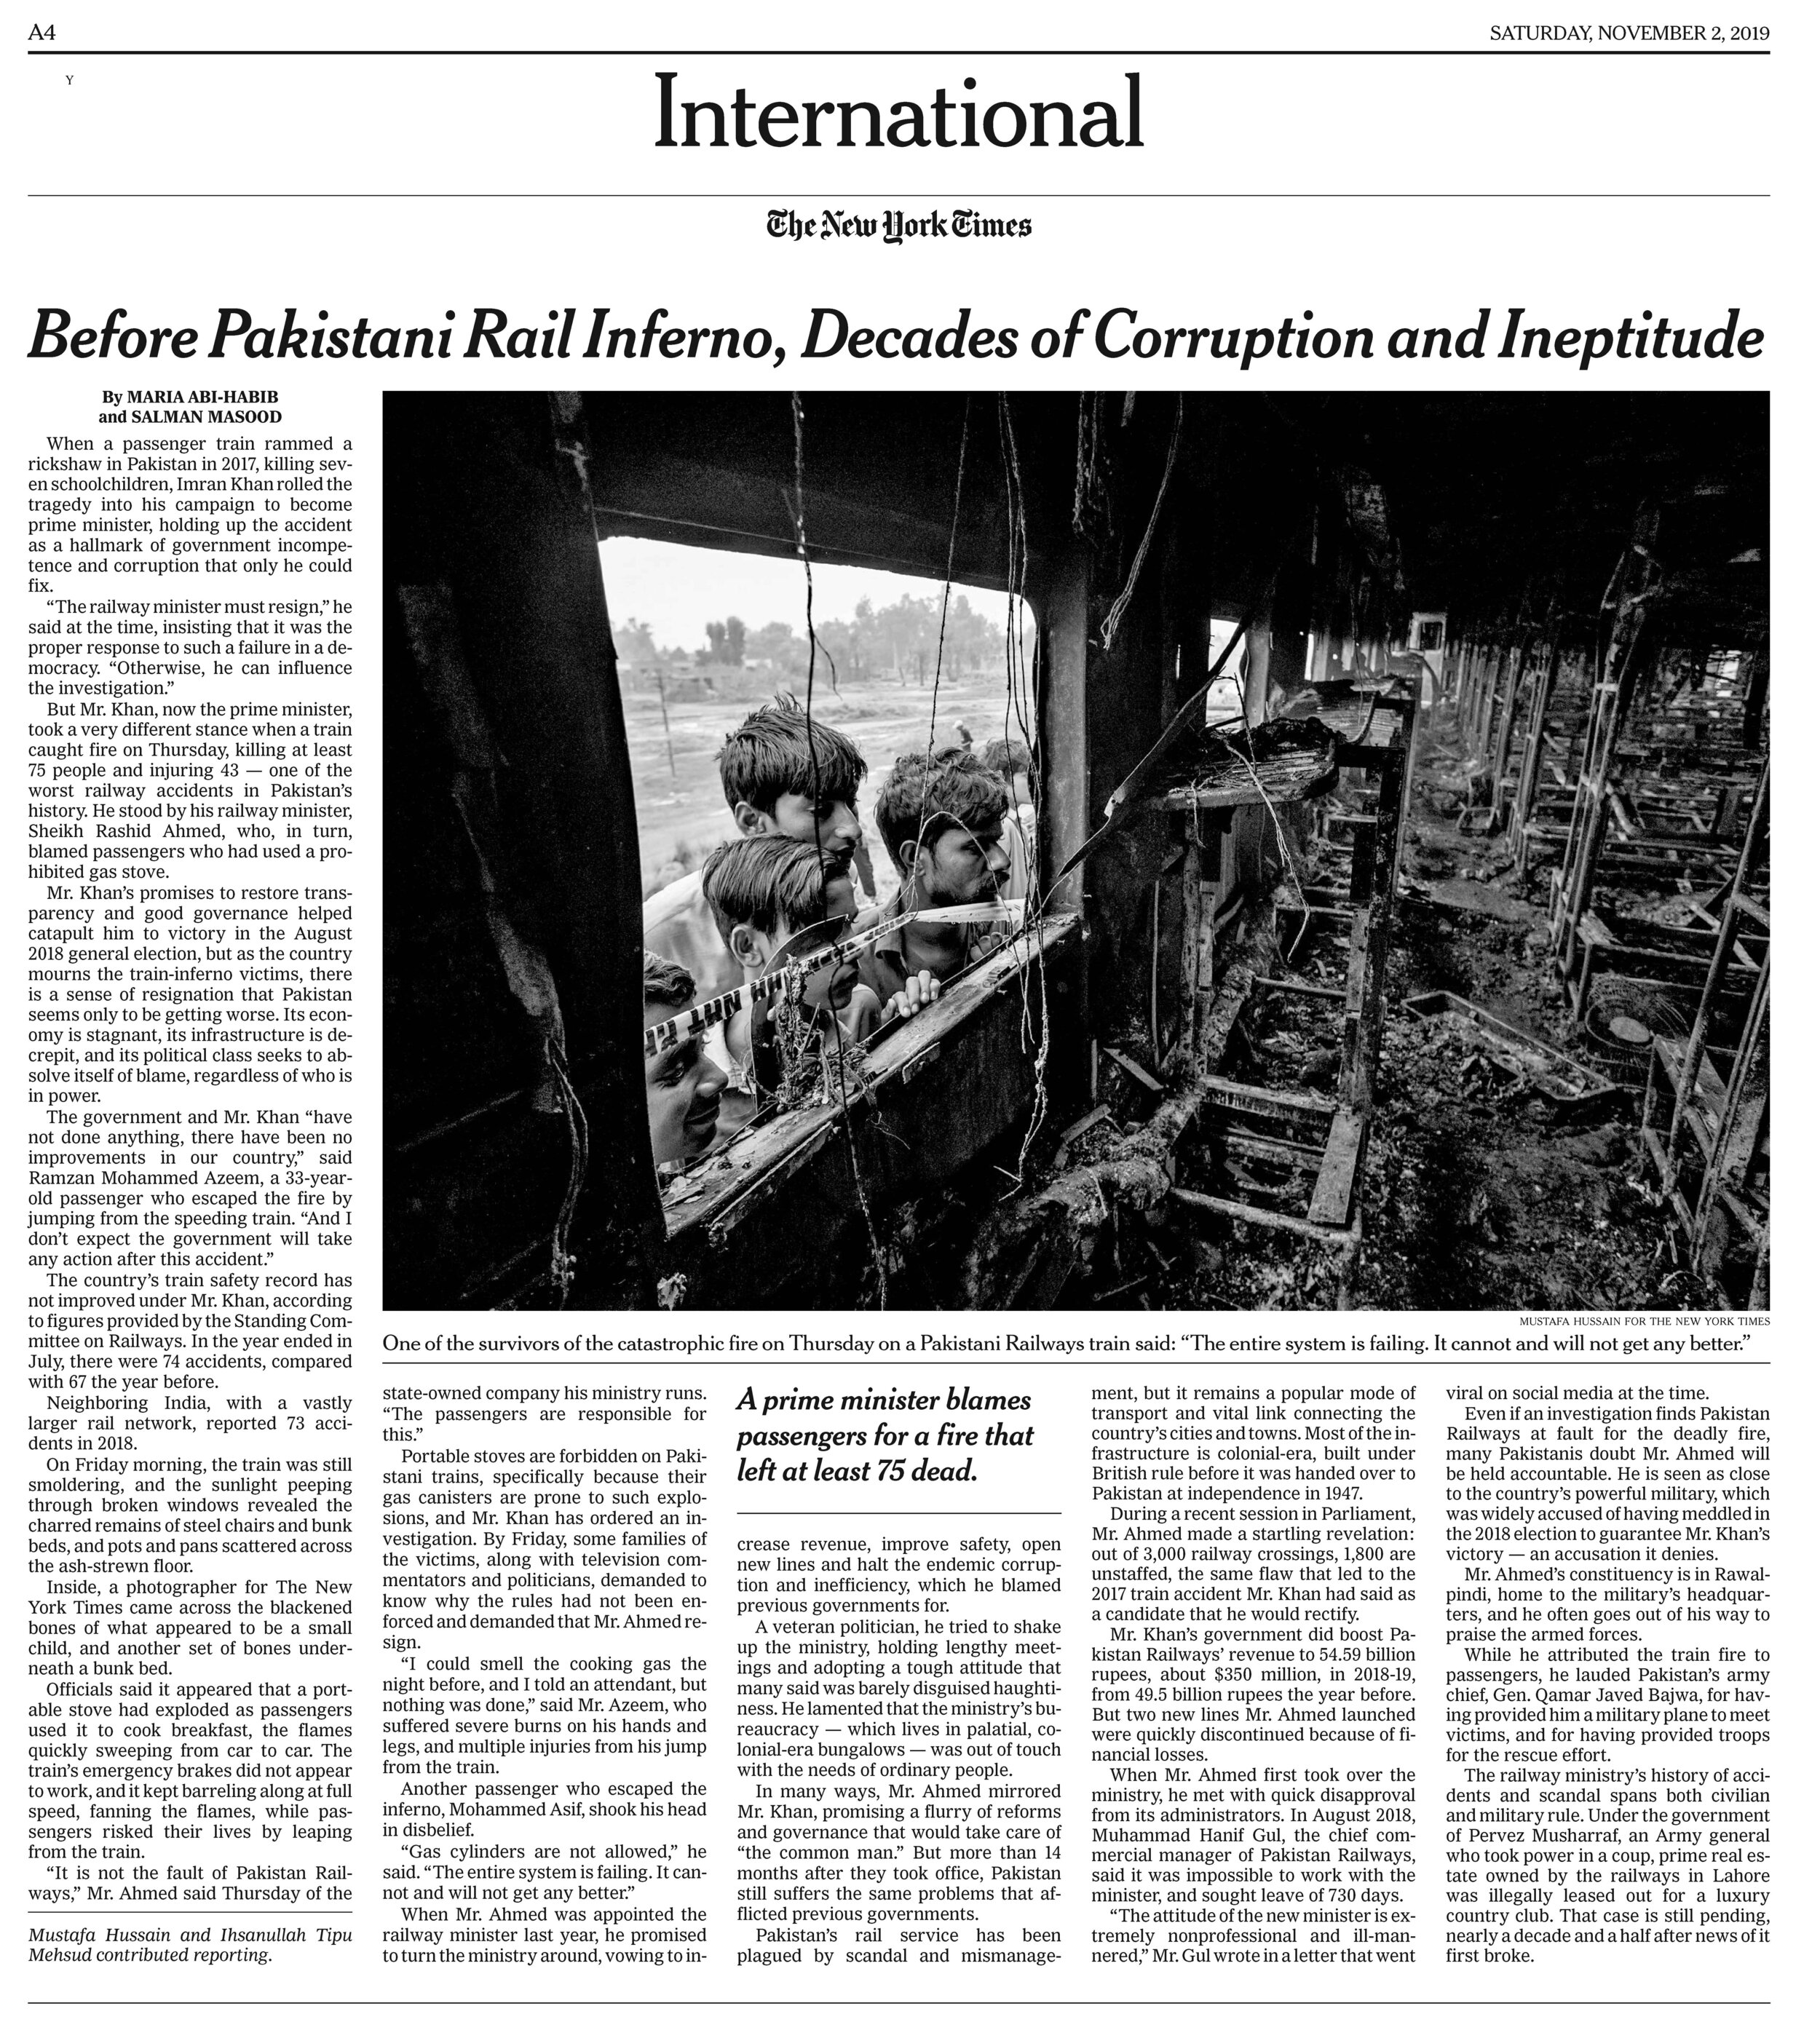   https://www.nytimes.com/2019/11/01/world/asia/pakistan-train-fire.html  